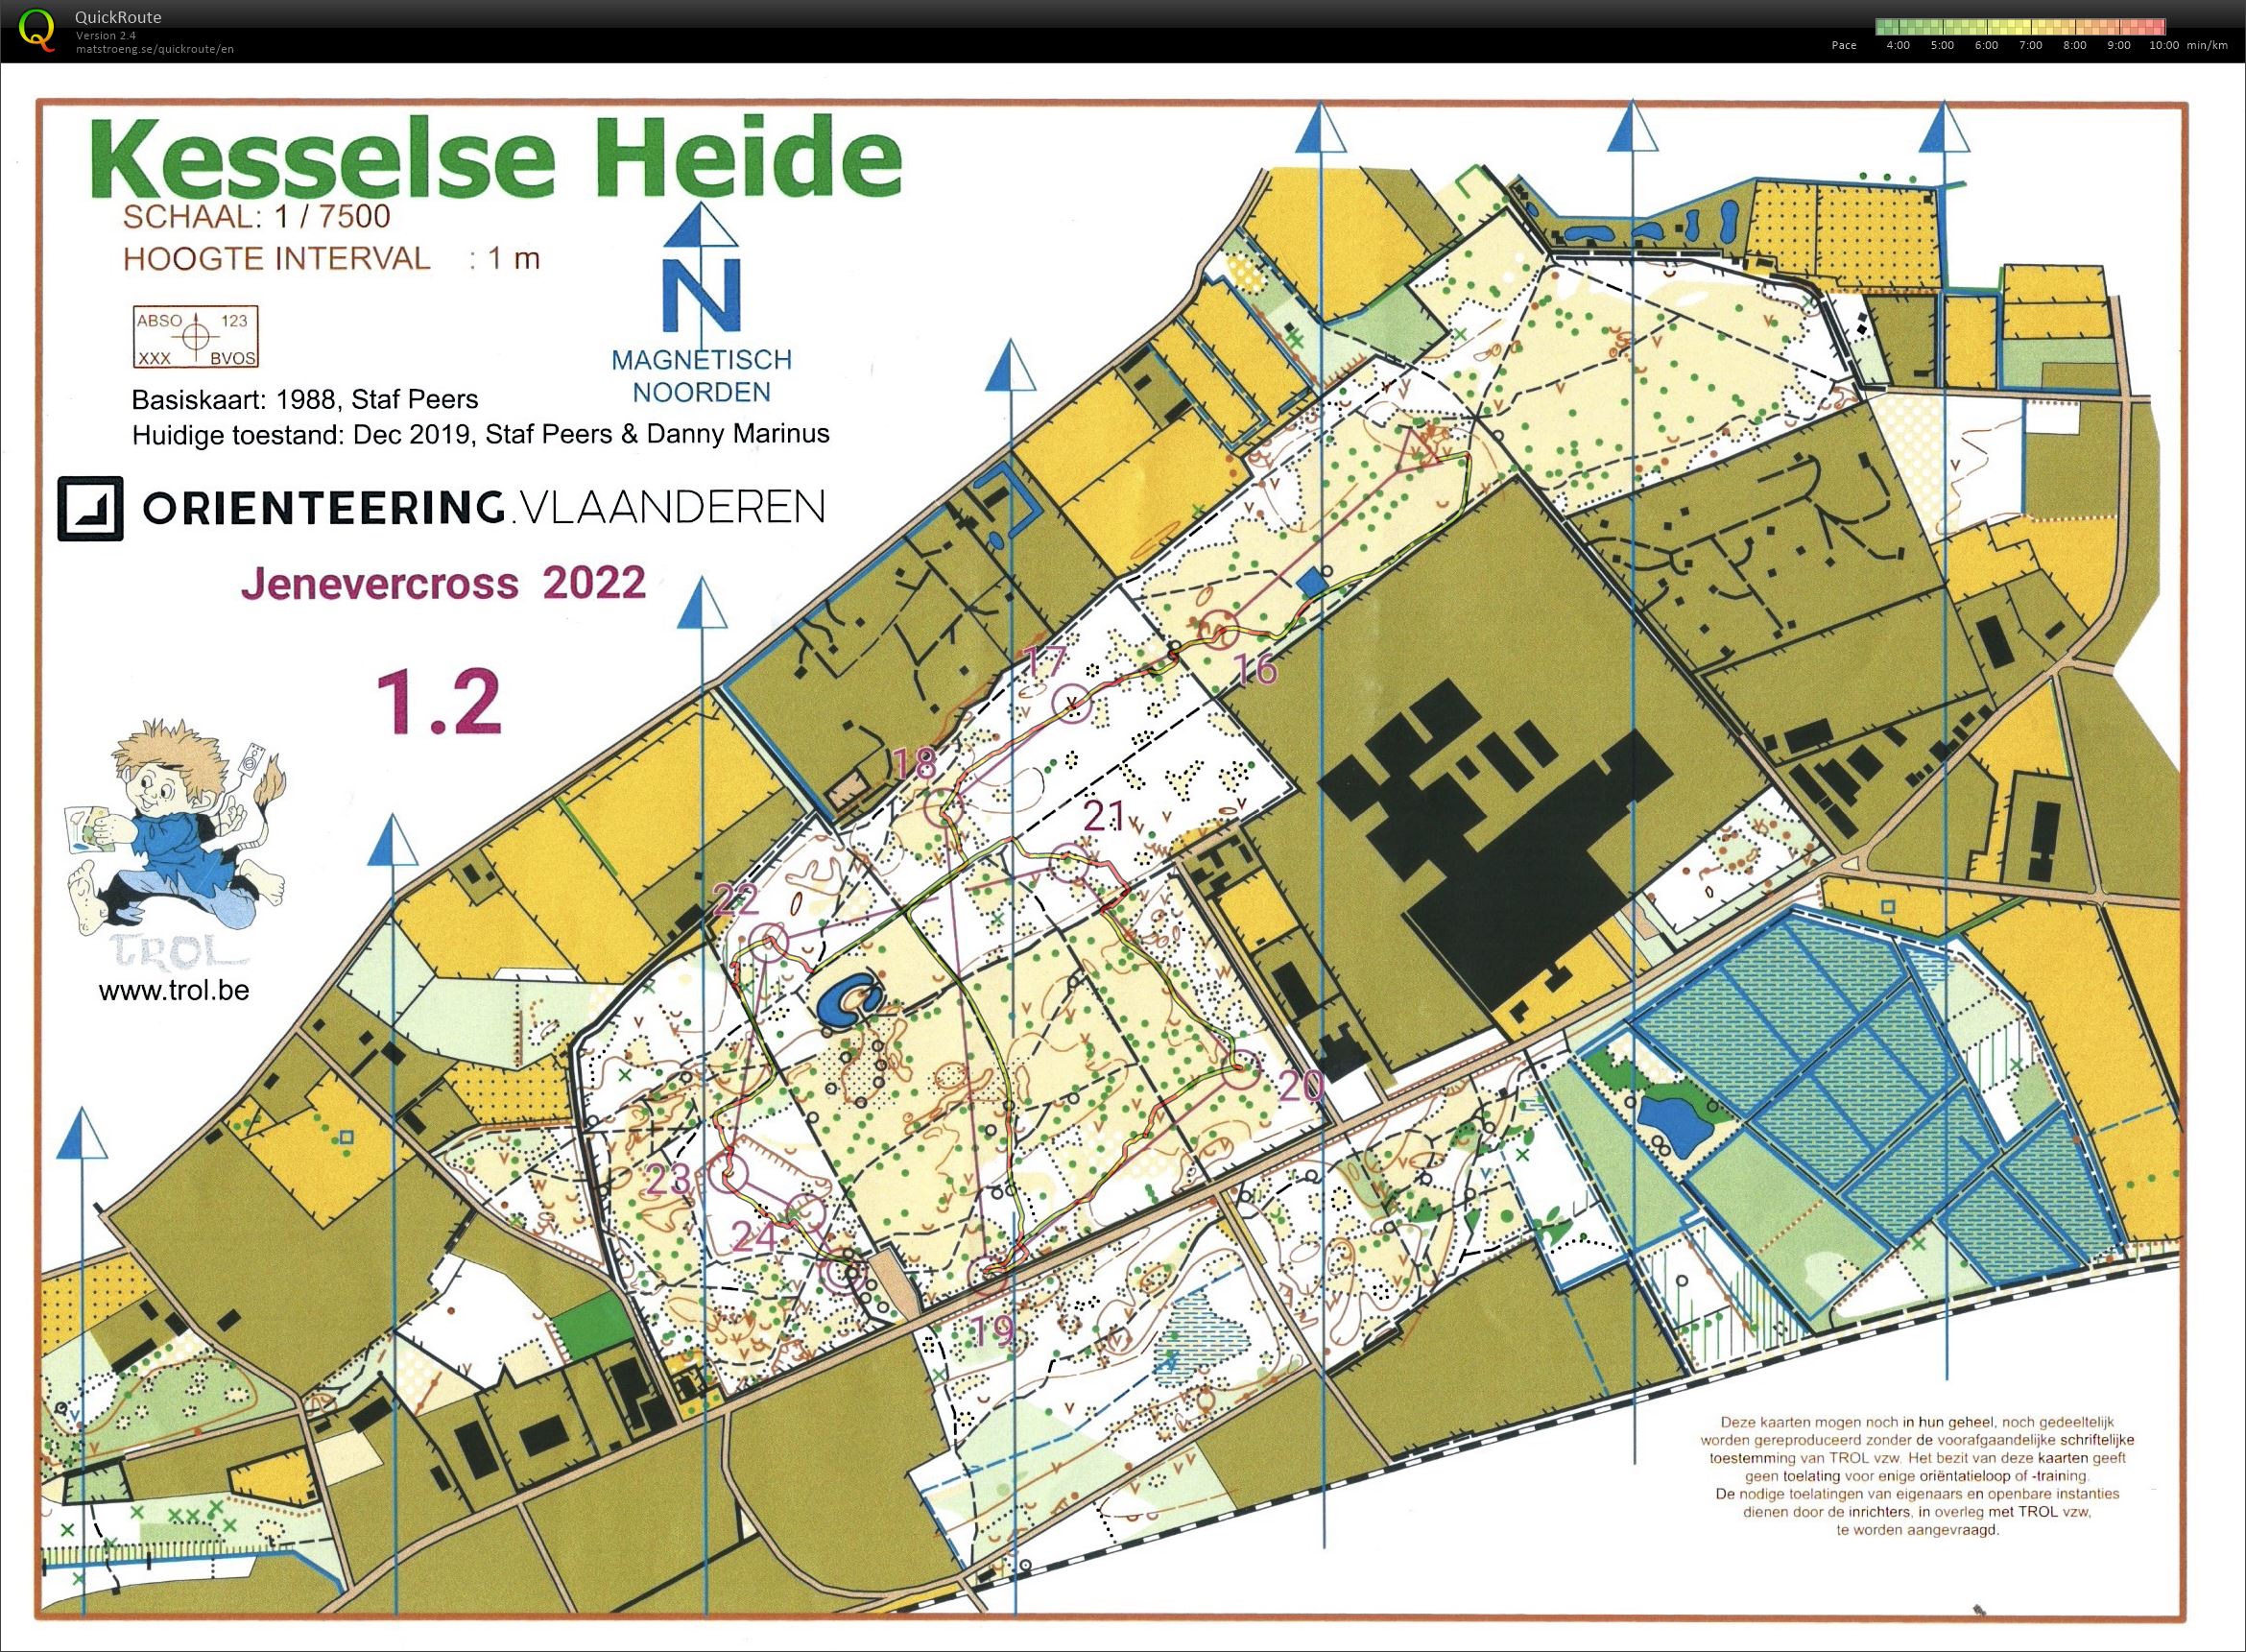 Jenevercross 2022 - Kesselse Heide - 1.2 (07-01-2022)